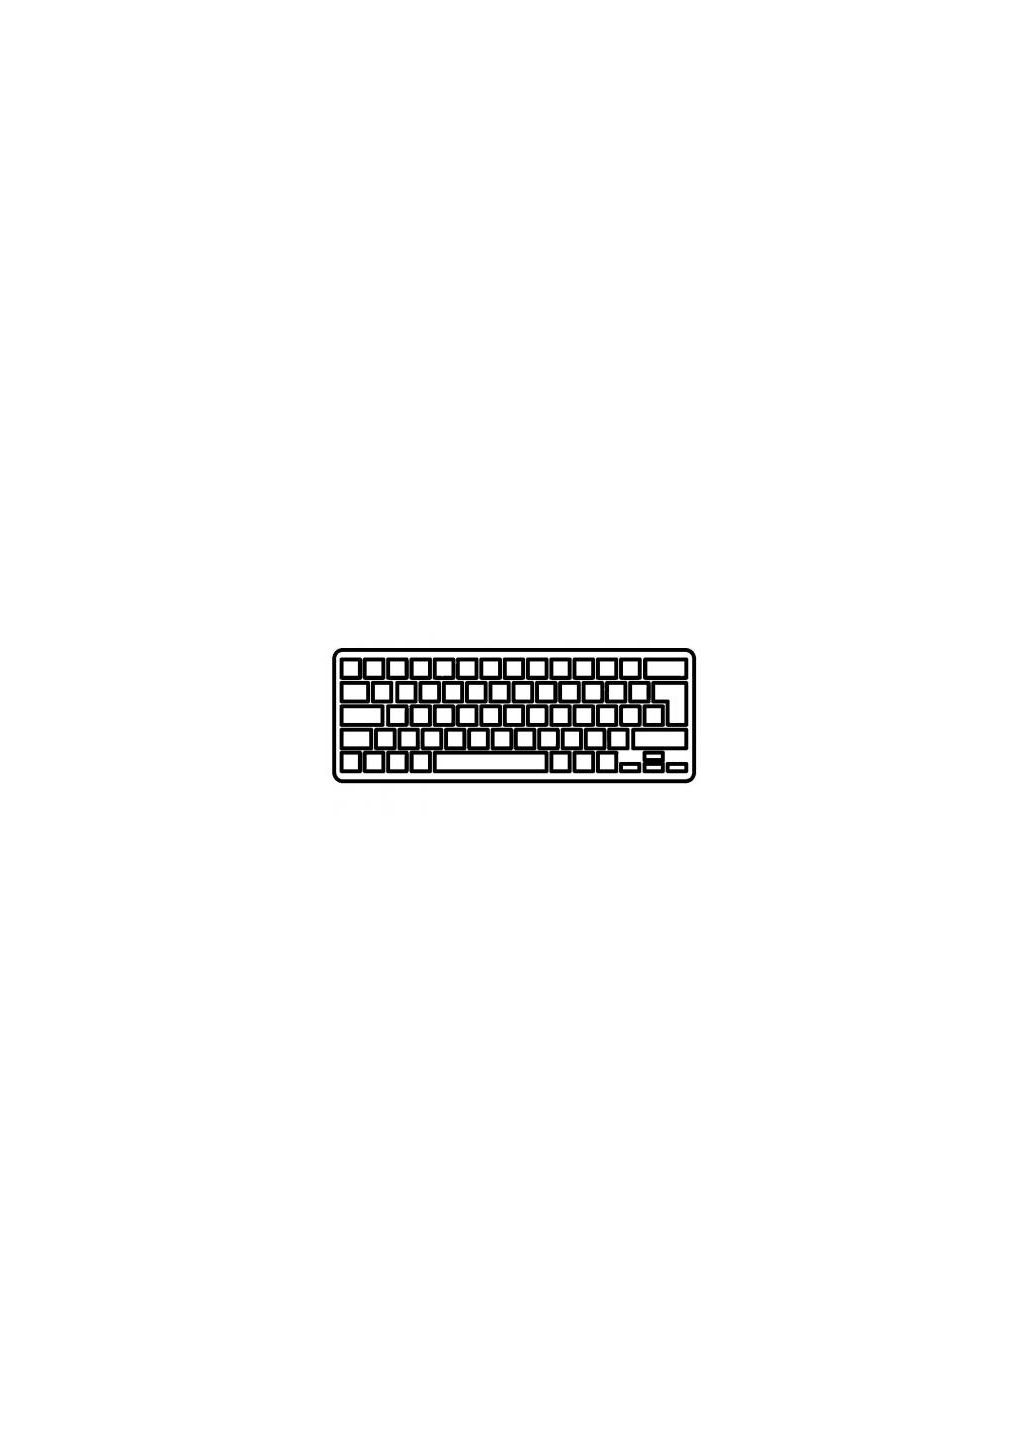 Клавиатура для ноутбука UA (A43103) Lenovo ideapad y450/y450a/y450aw/y450g/y550 series белая (276707905)